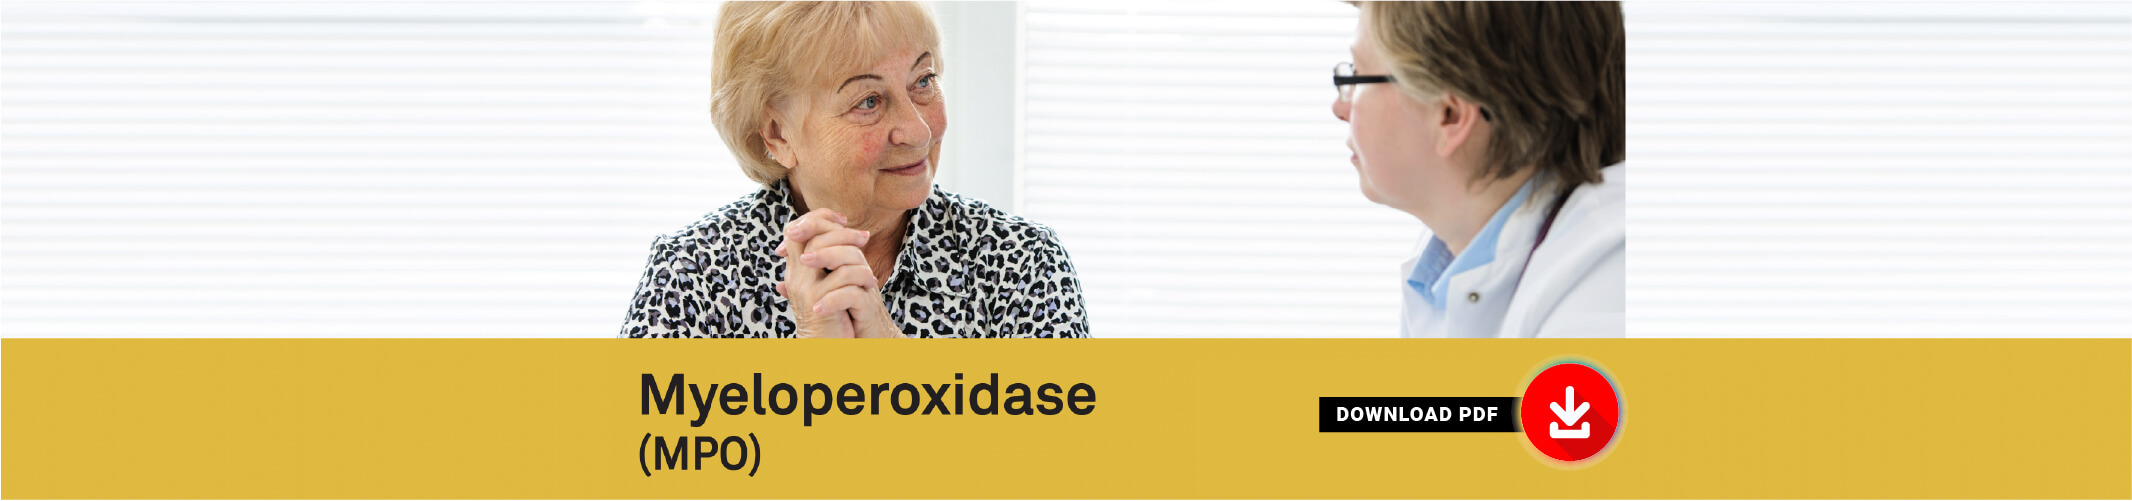 Myeloperoxidase (MPO) - PDF Download